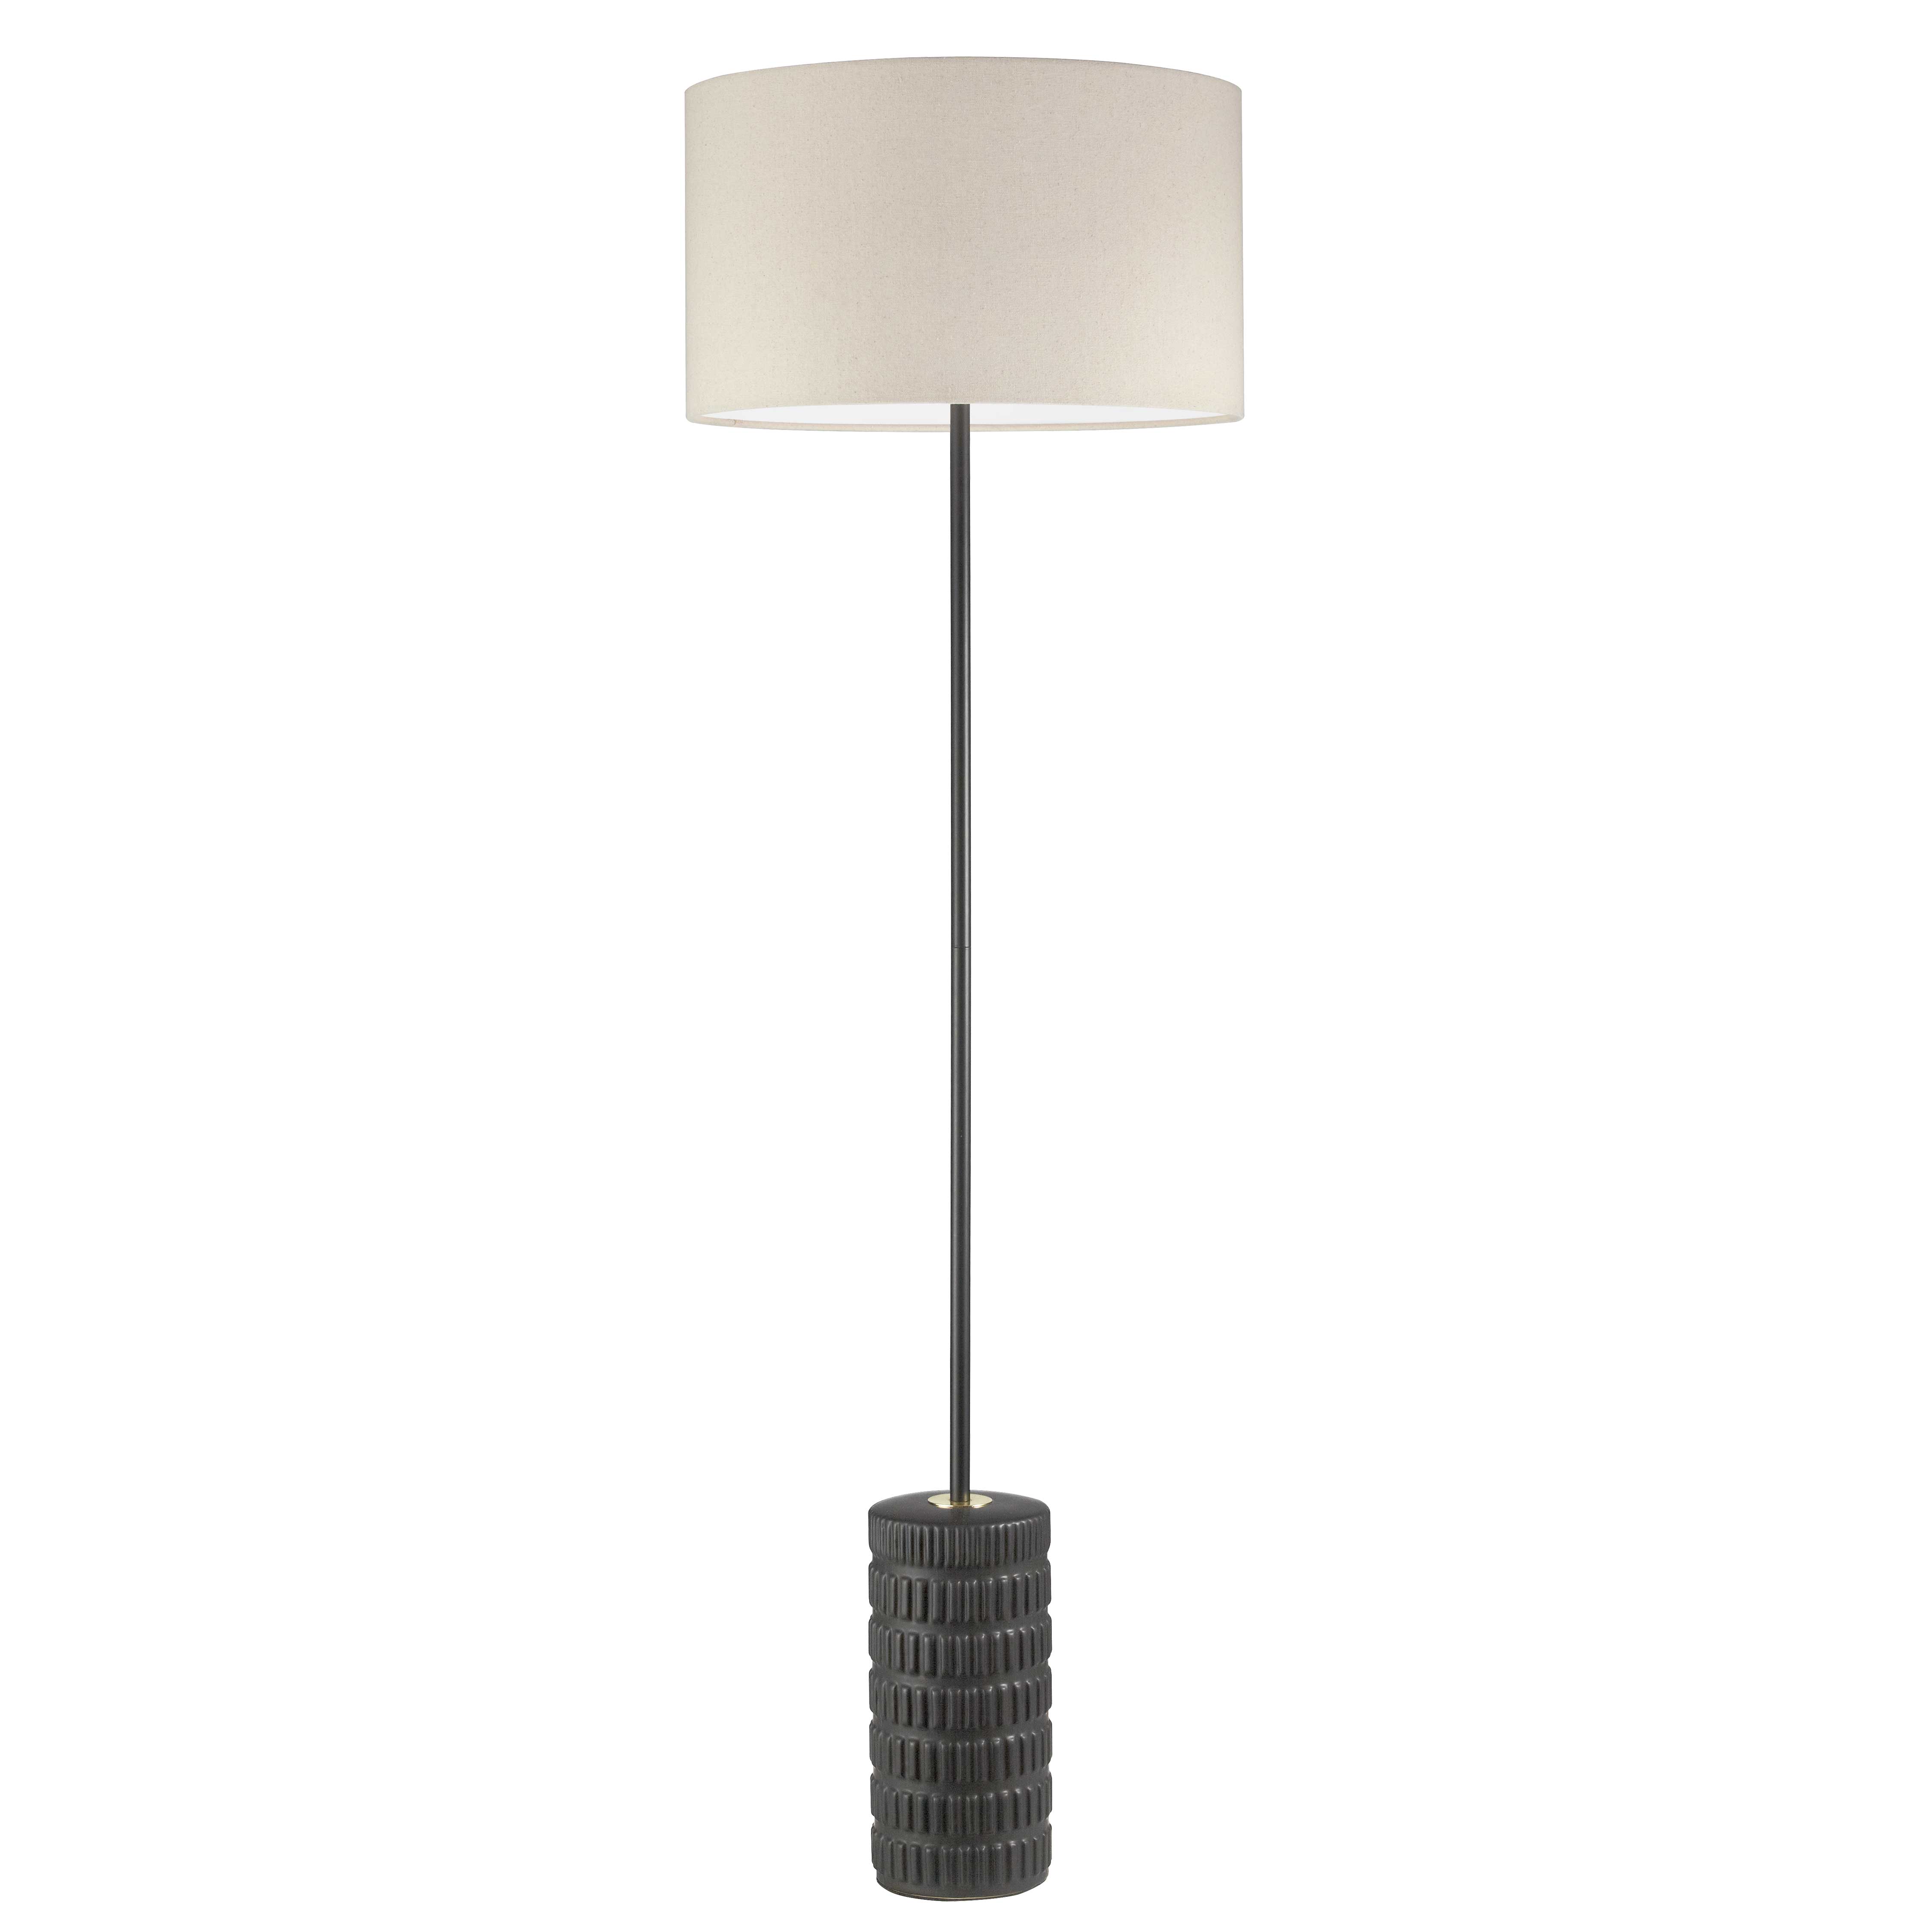 1LT Incandescent Floor Lamp, MB w/ BG Shade